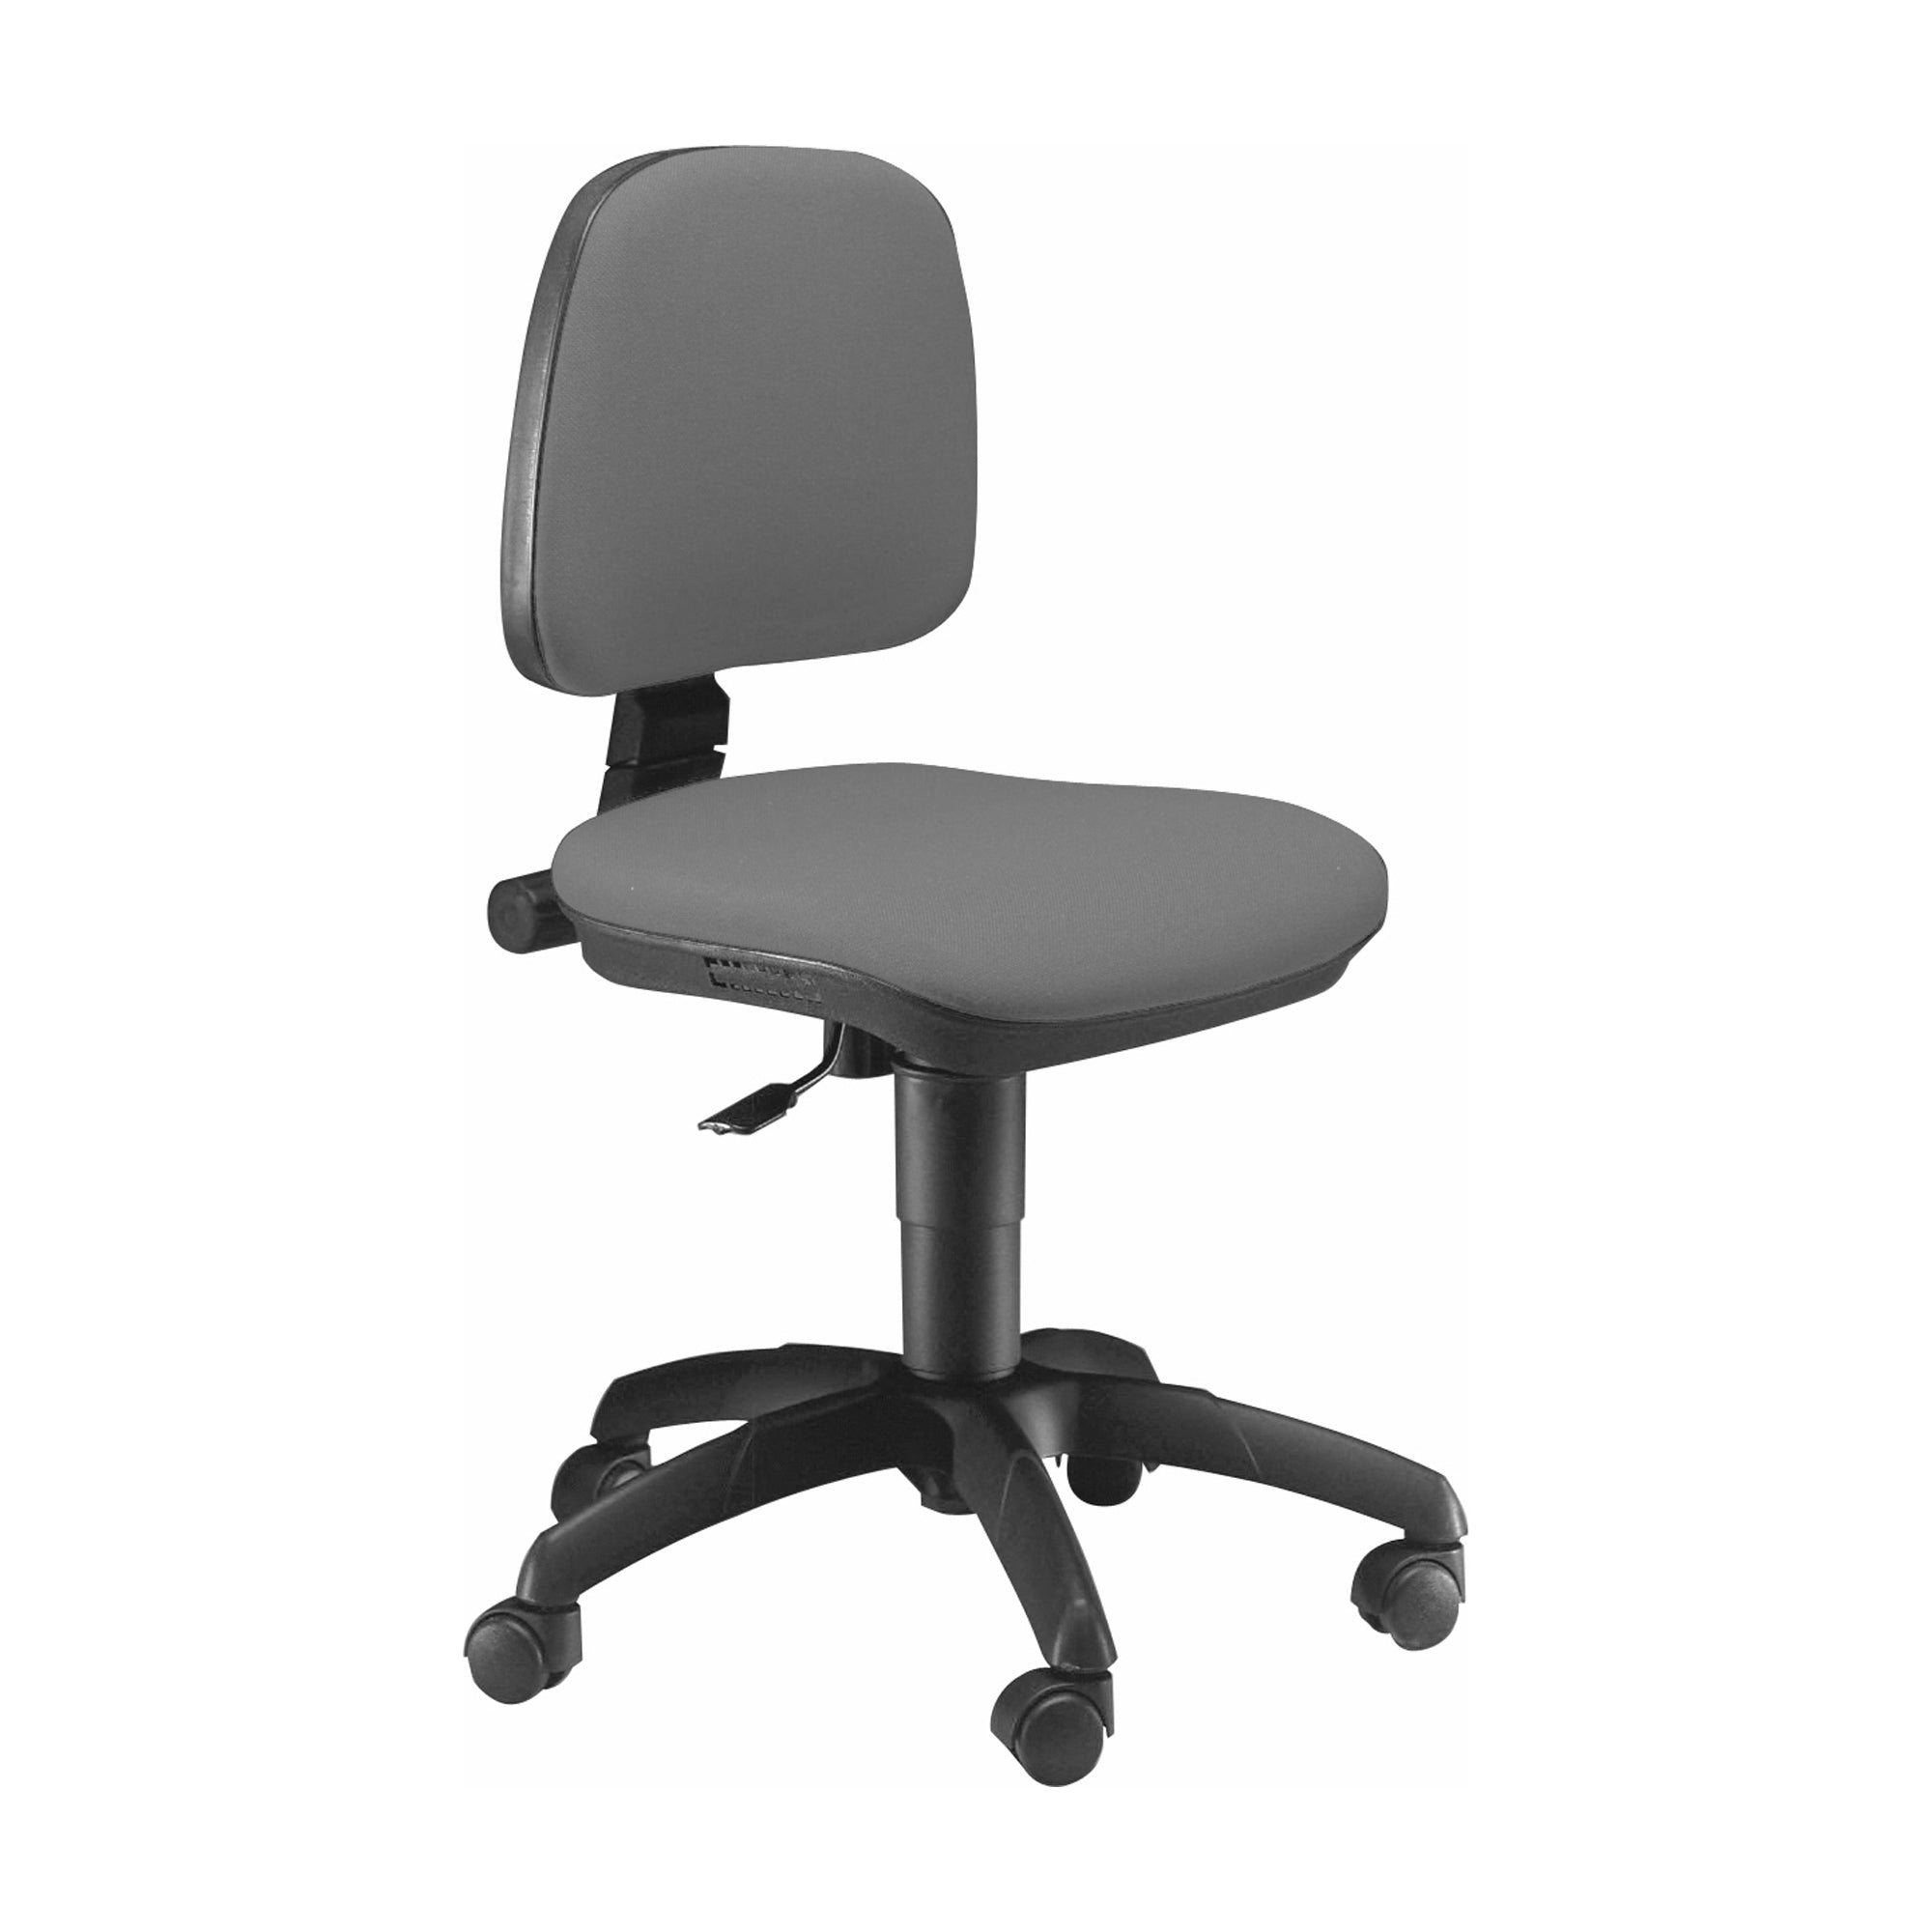 unisit-sedia-operativa-atlas-a41b-grigio-senza-braccioli